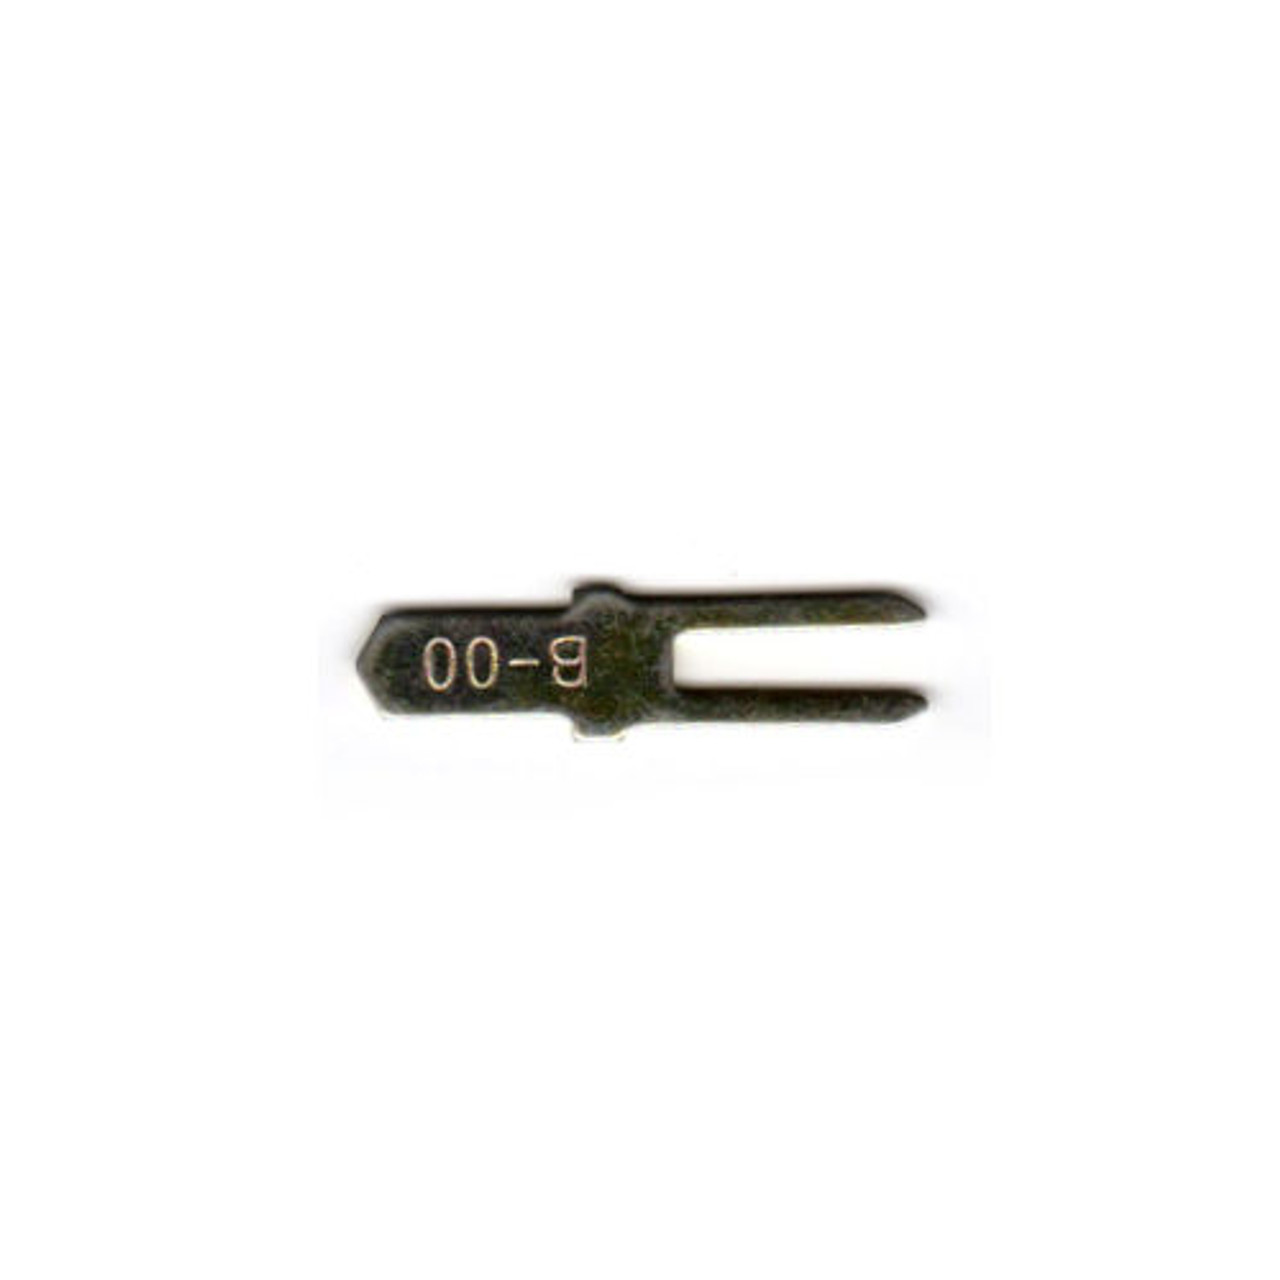 Alarm Lock DL2700IC-S US26D Pushbutton Cylindrical Door Lock